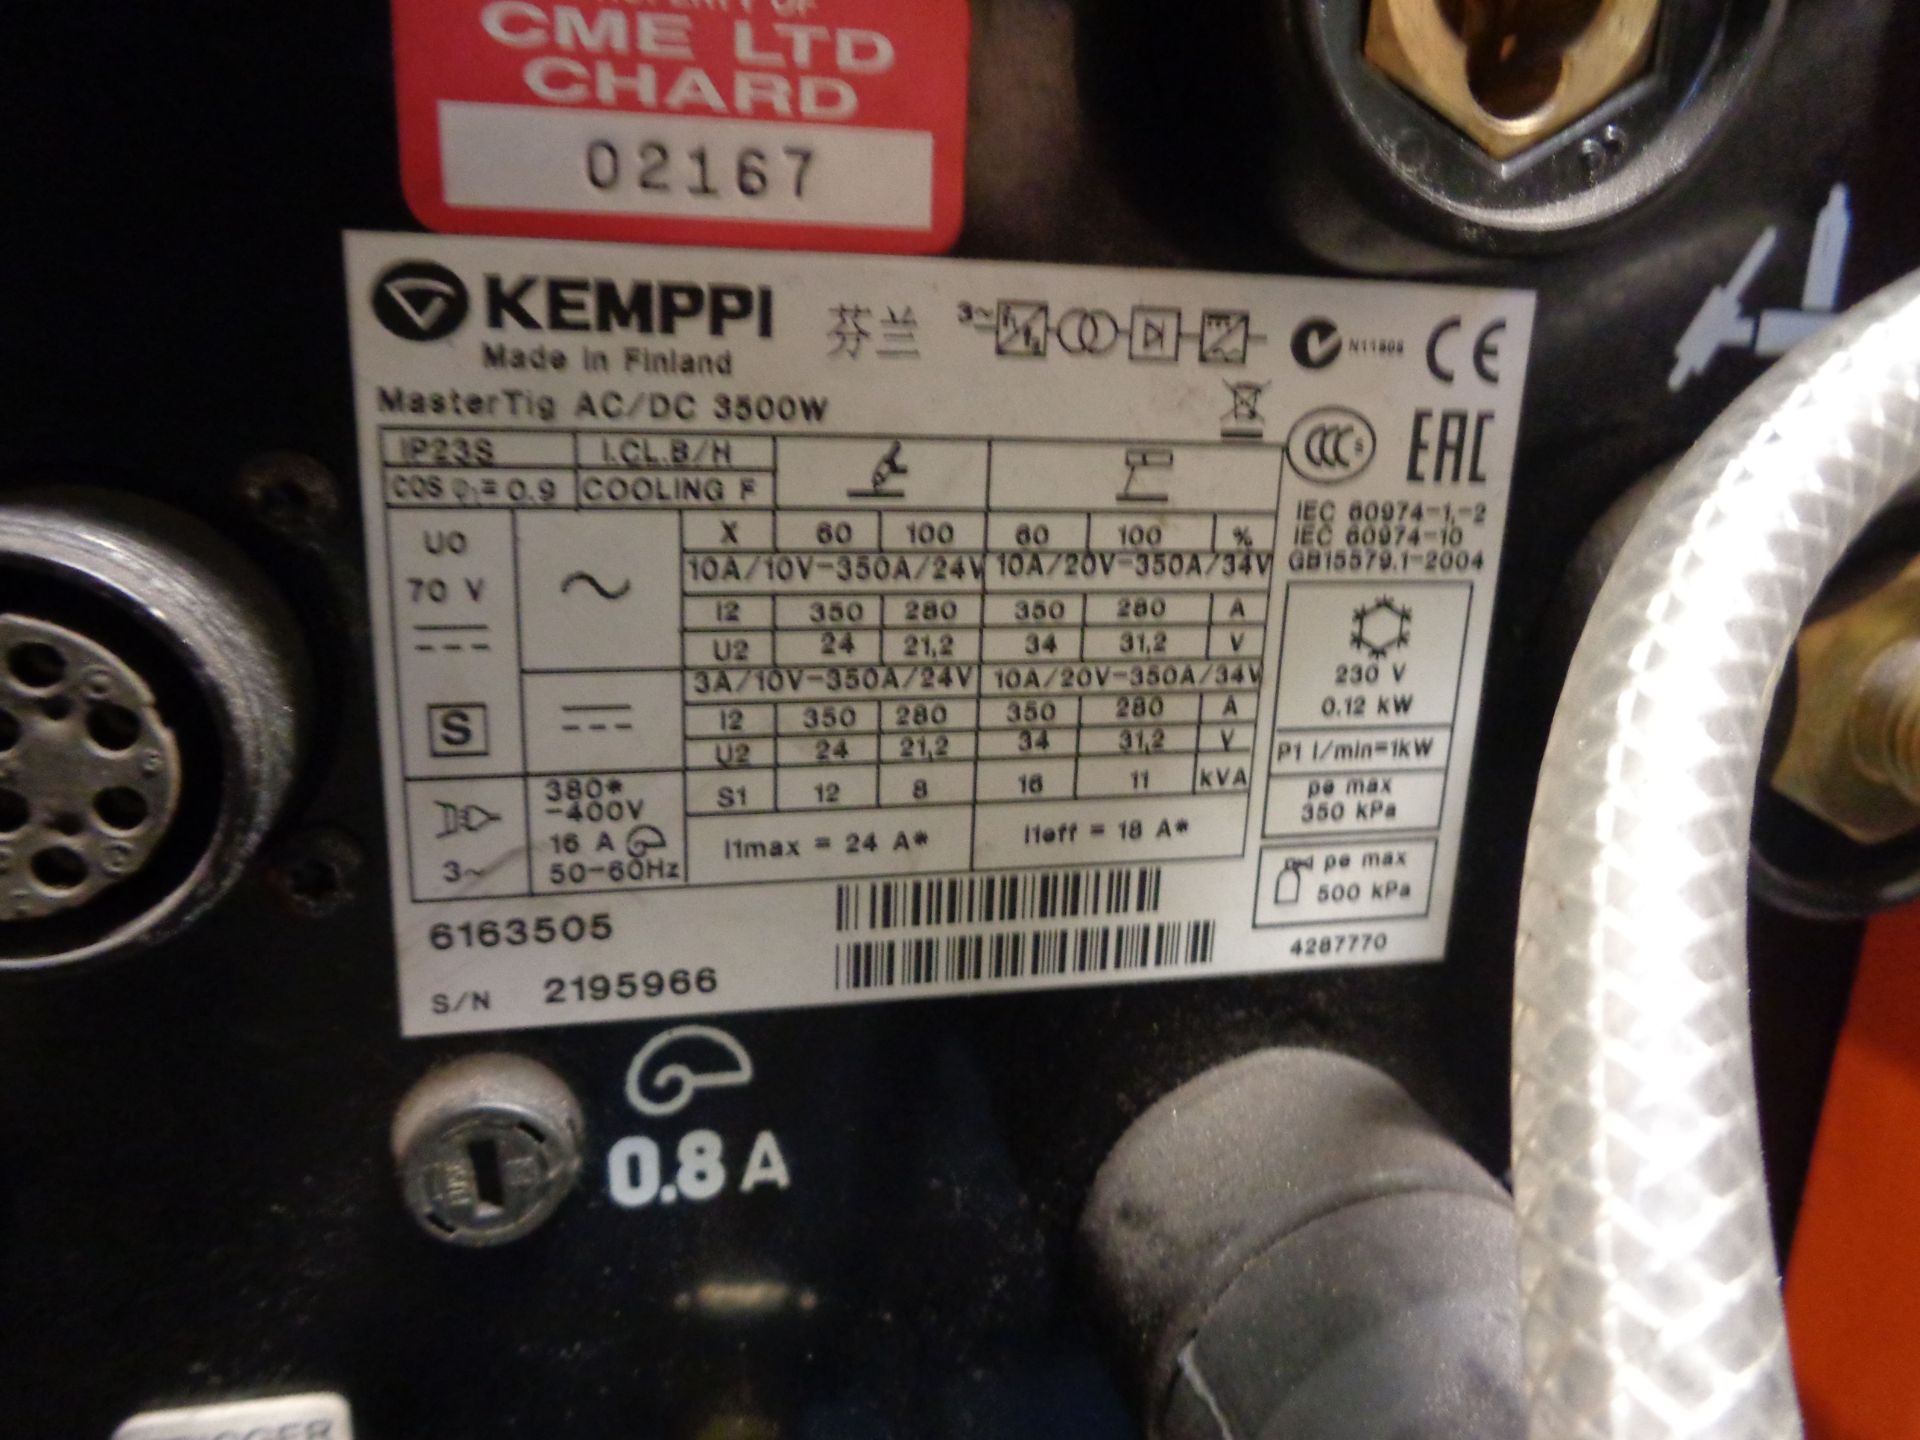 Kemppi Master Tig AC/DC 2500W tig welder serial no. 2195966 - Bild 4 aus 5